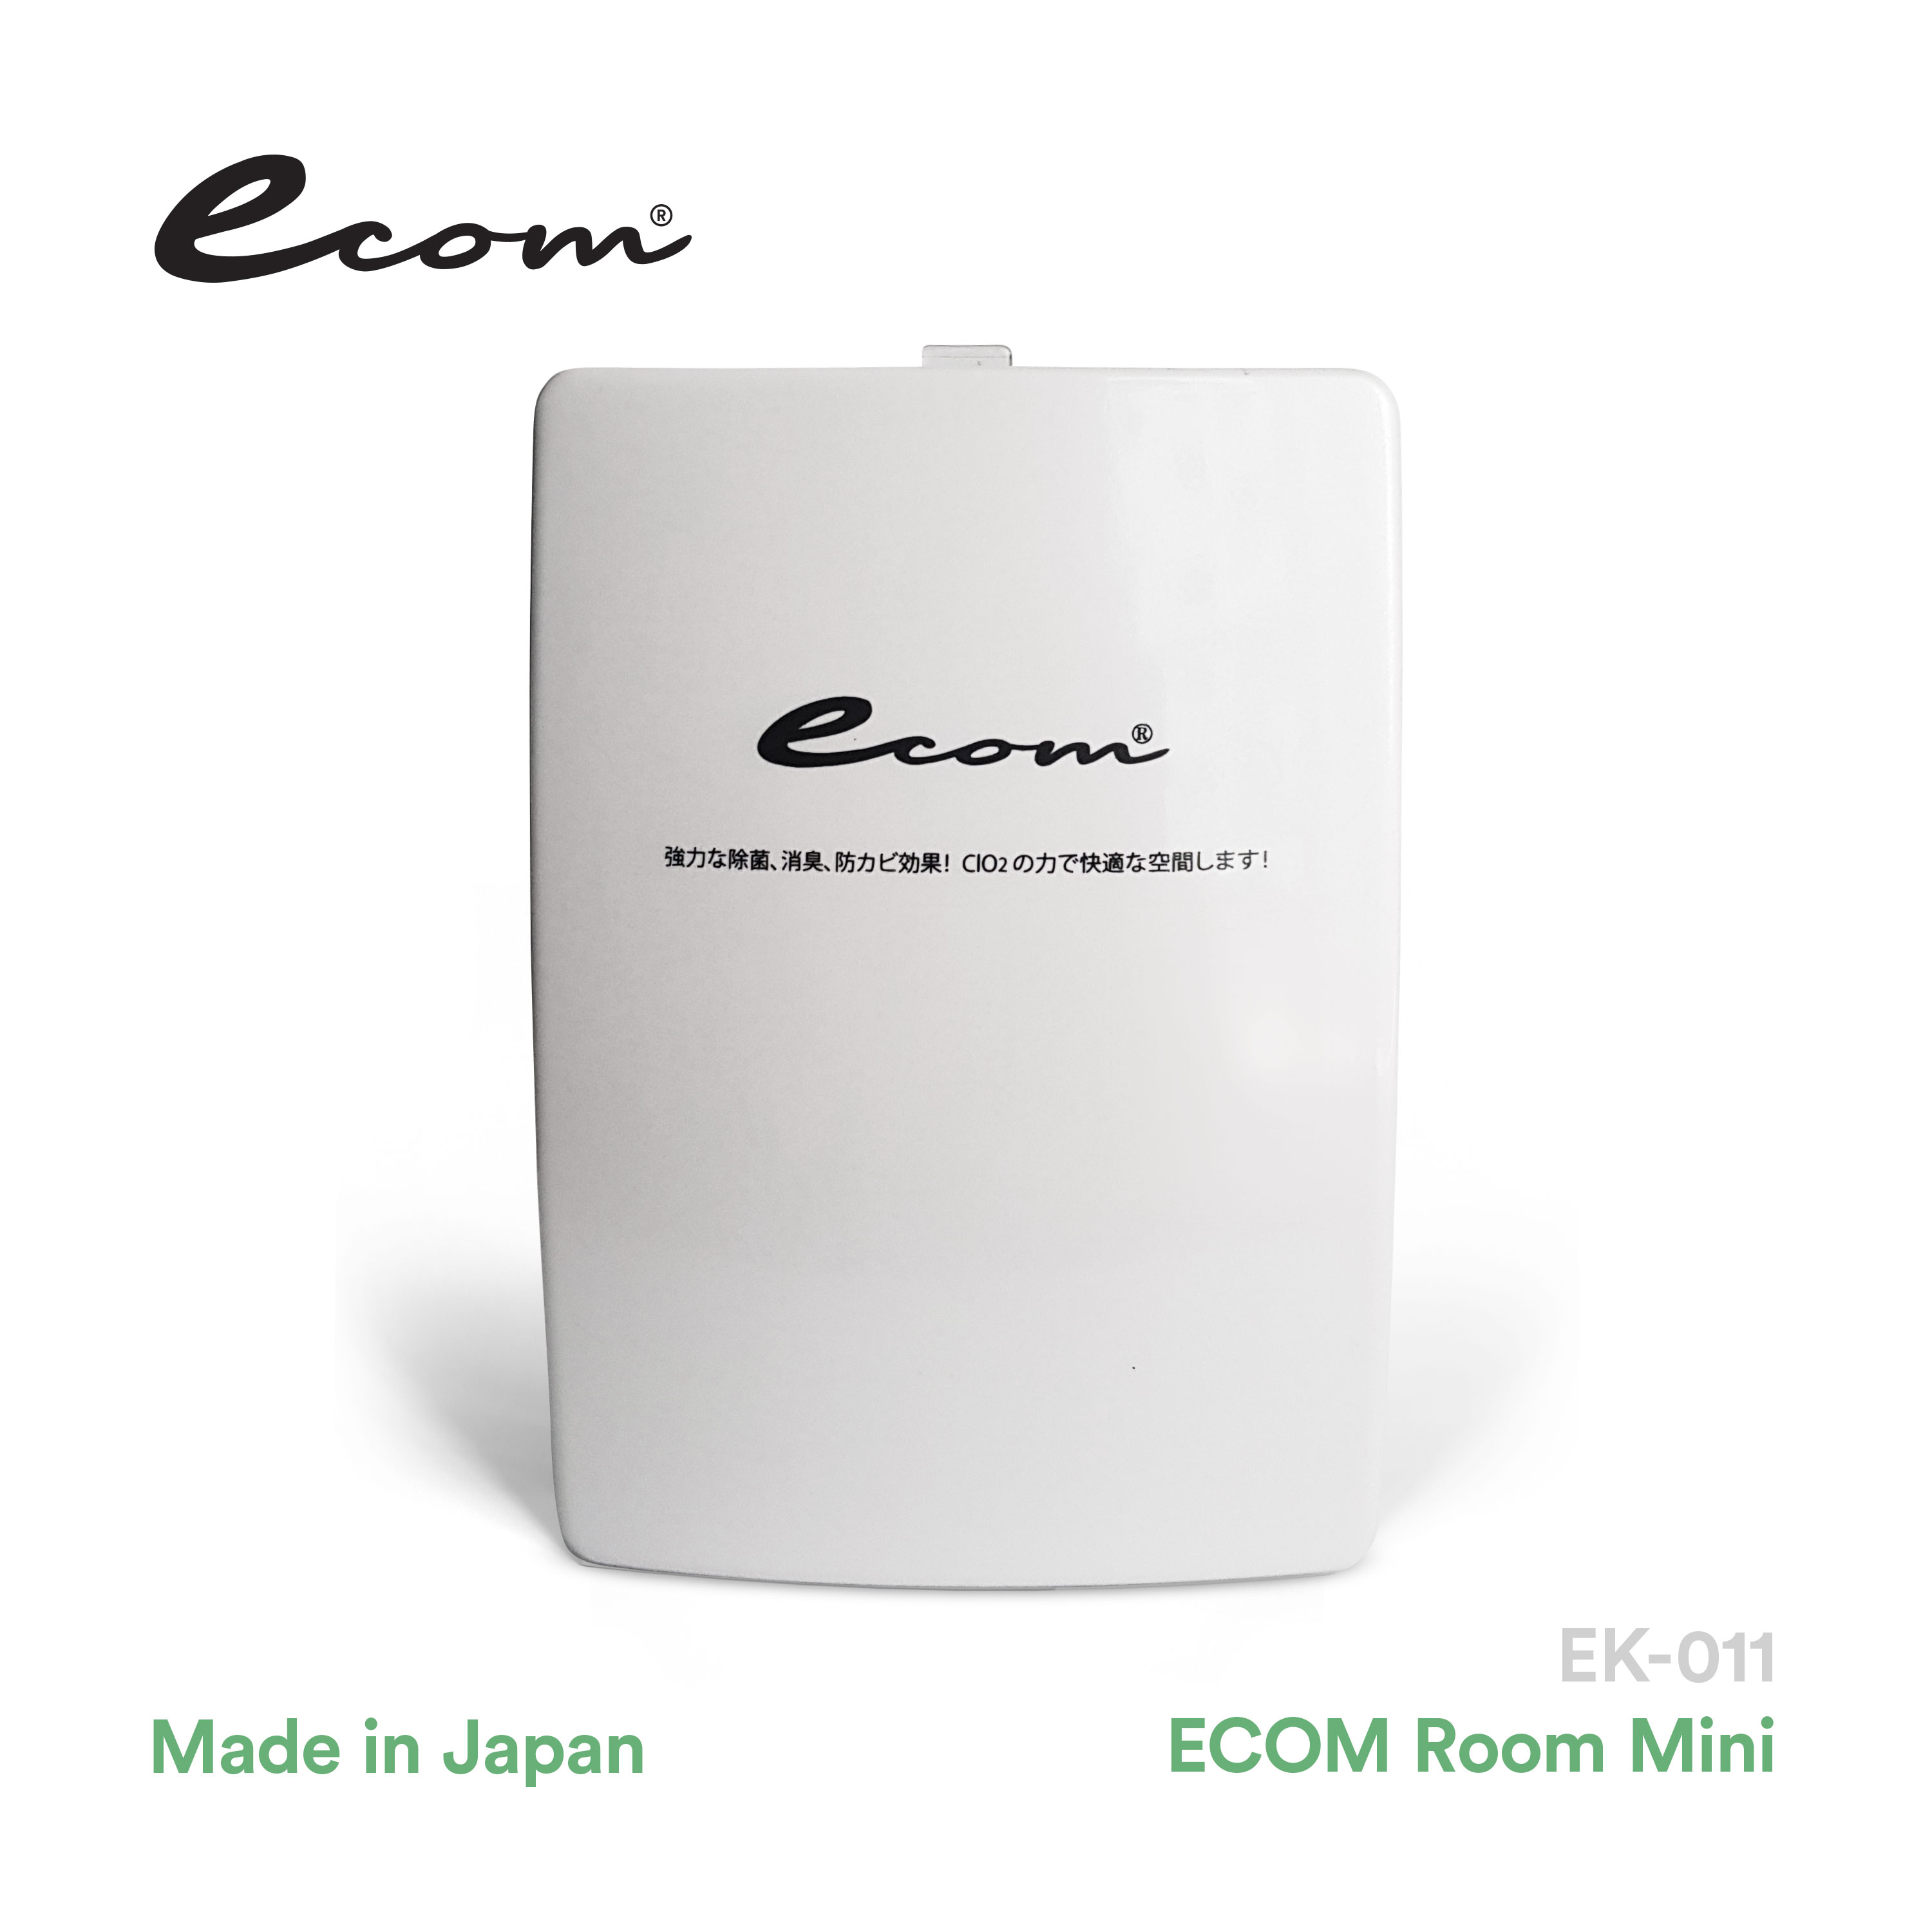 Ecom® Room Mini